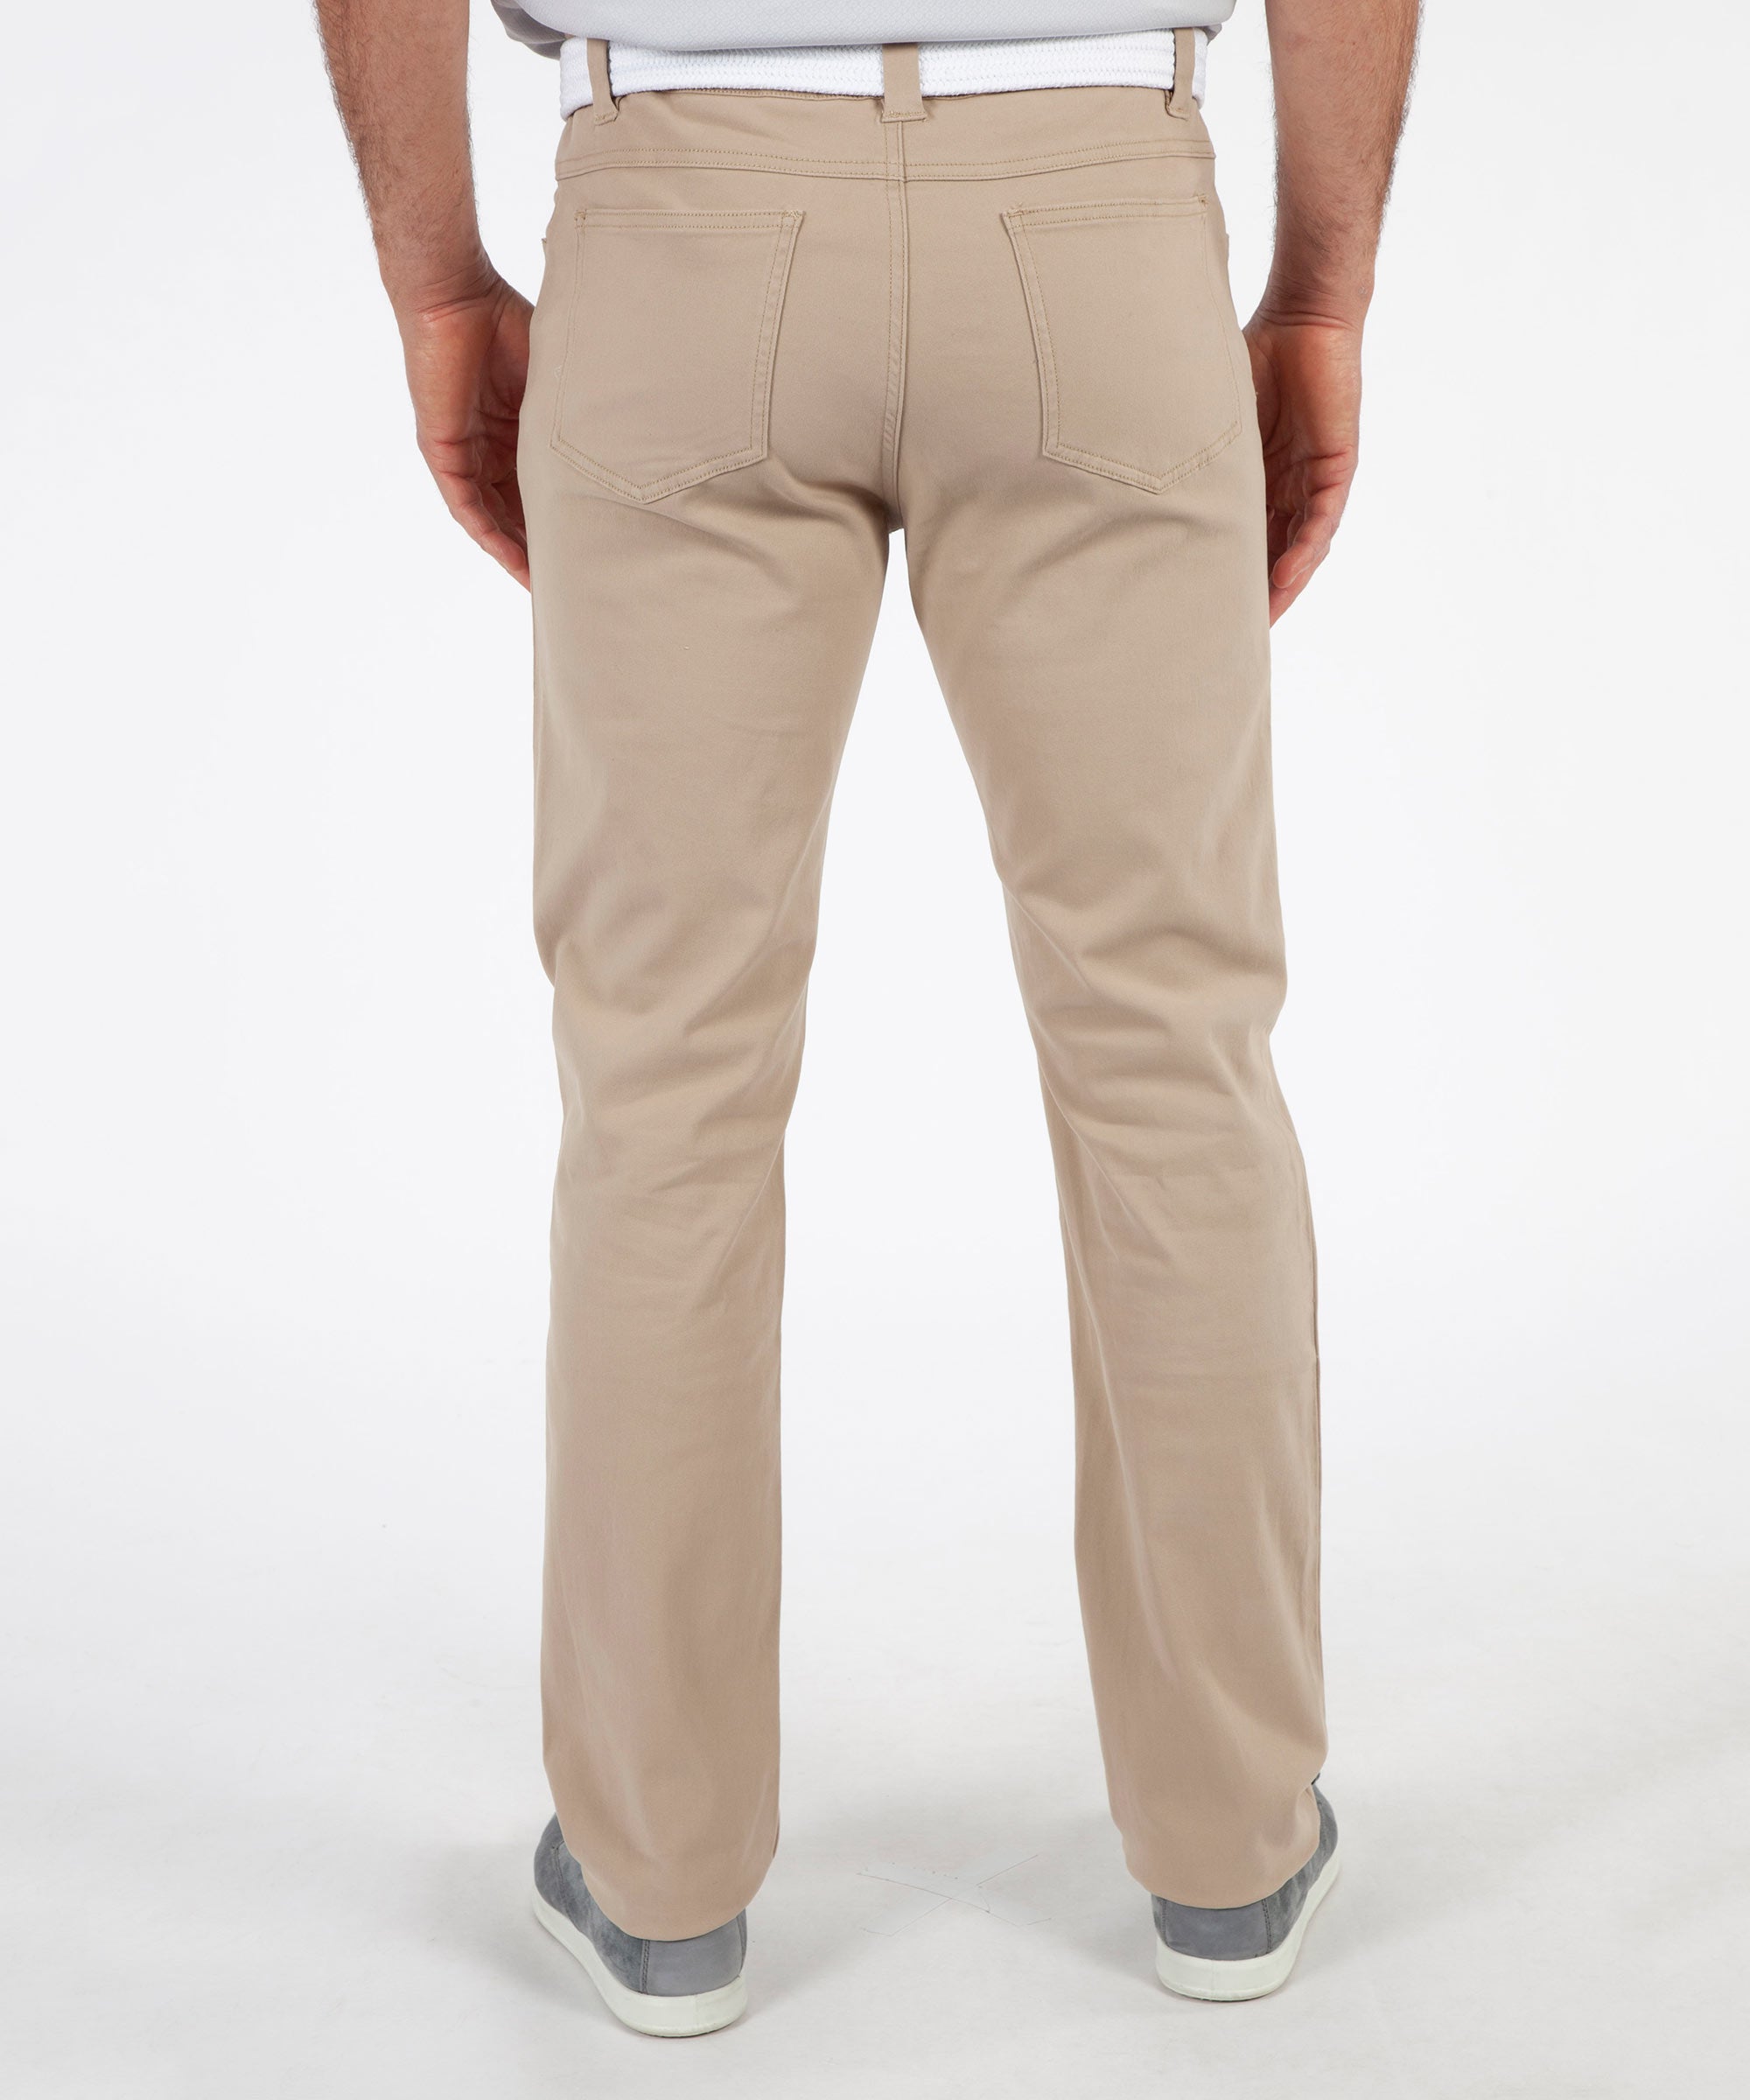 Men's Cotton Slim Fit Stretch Khaki Pants Solid Color Business Casual  Skinny Dress Pants | Wish